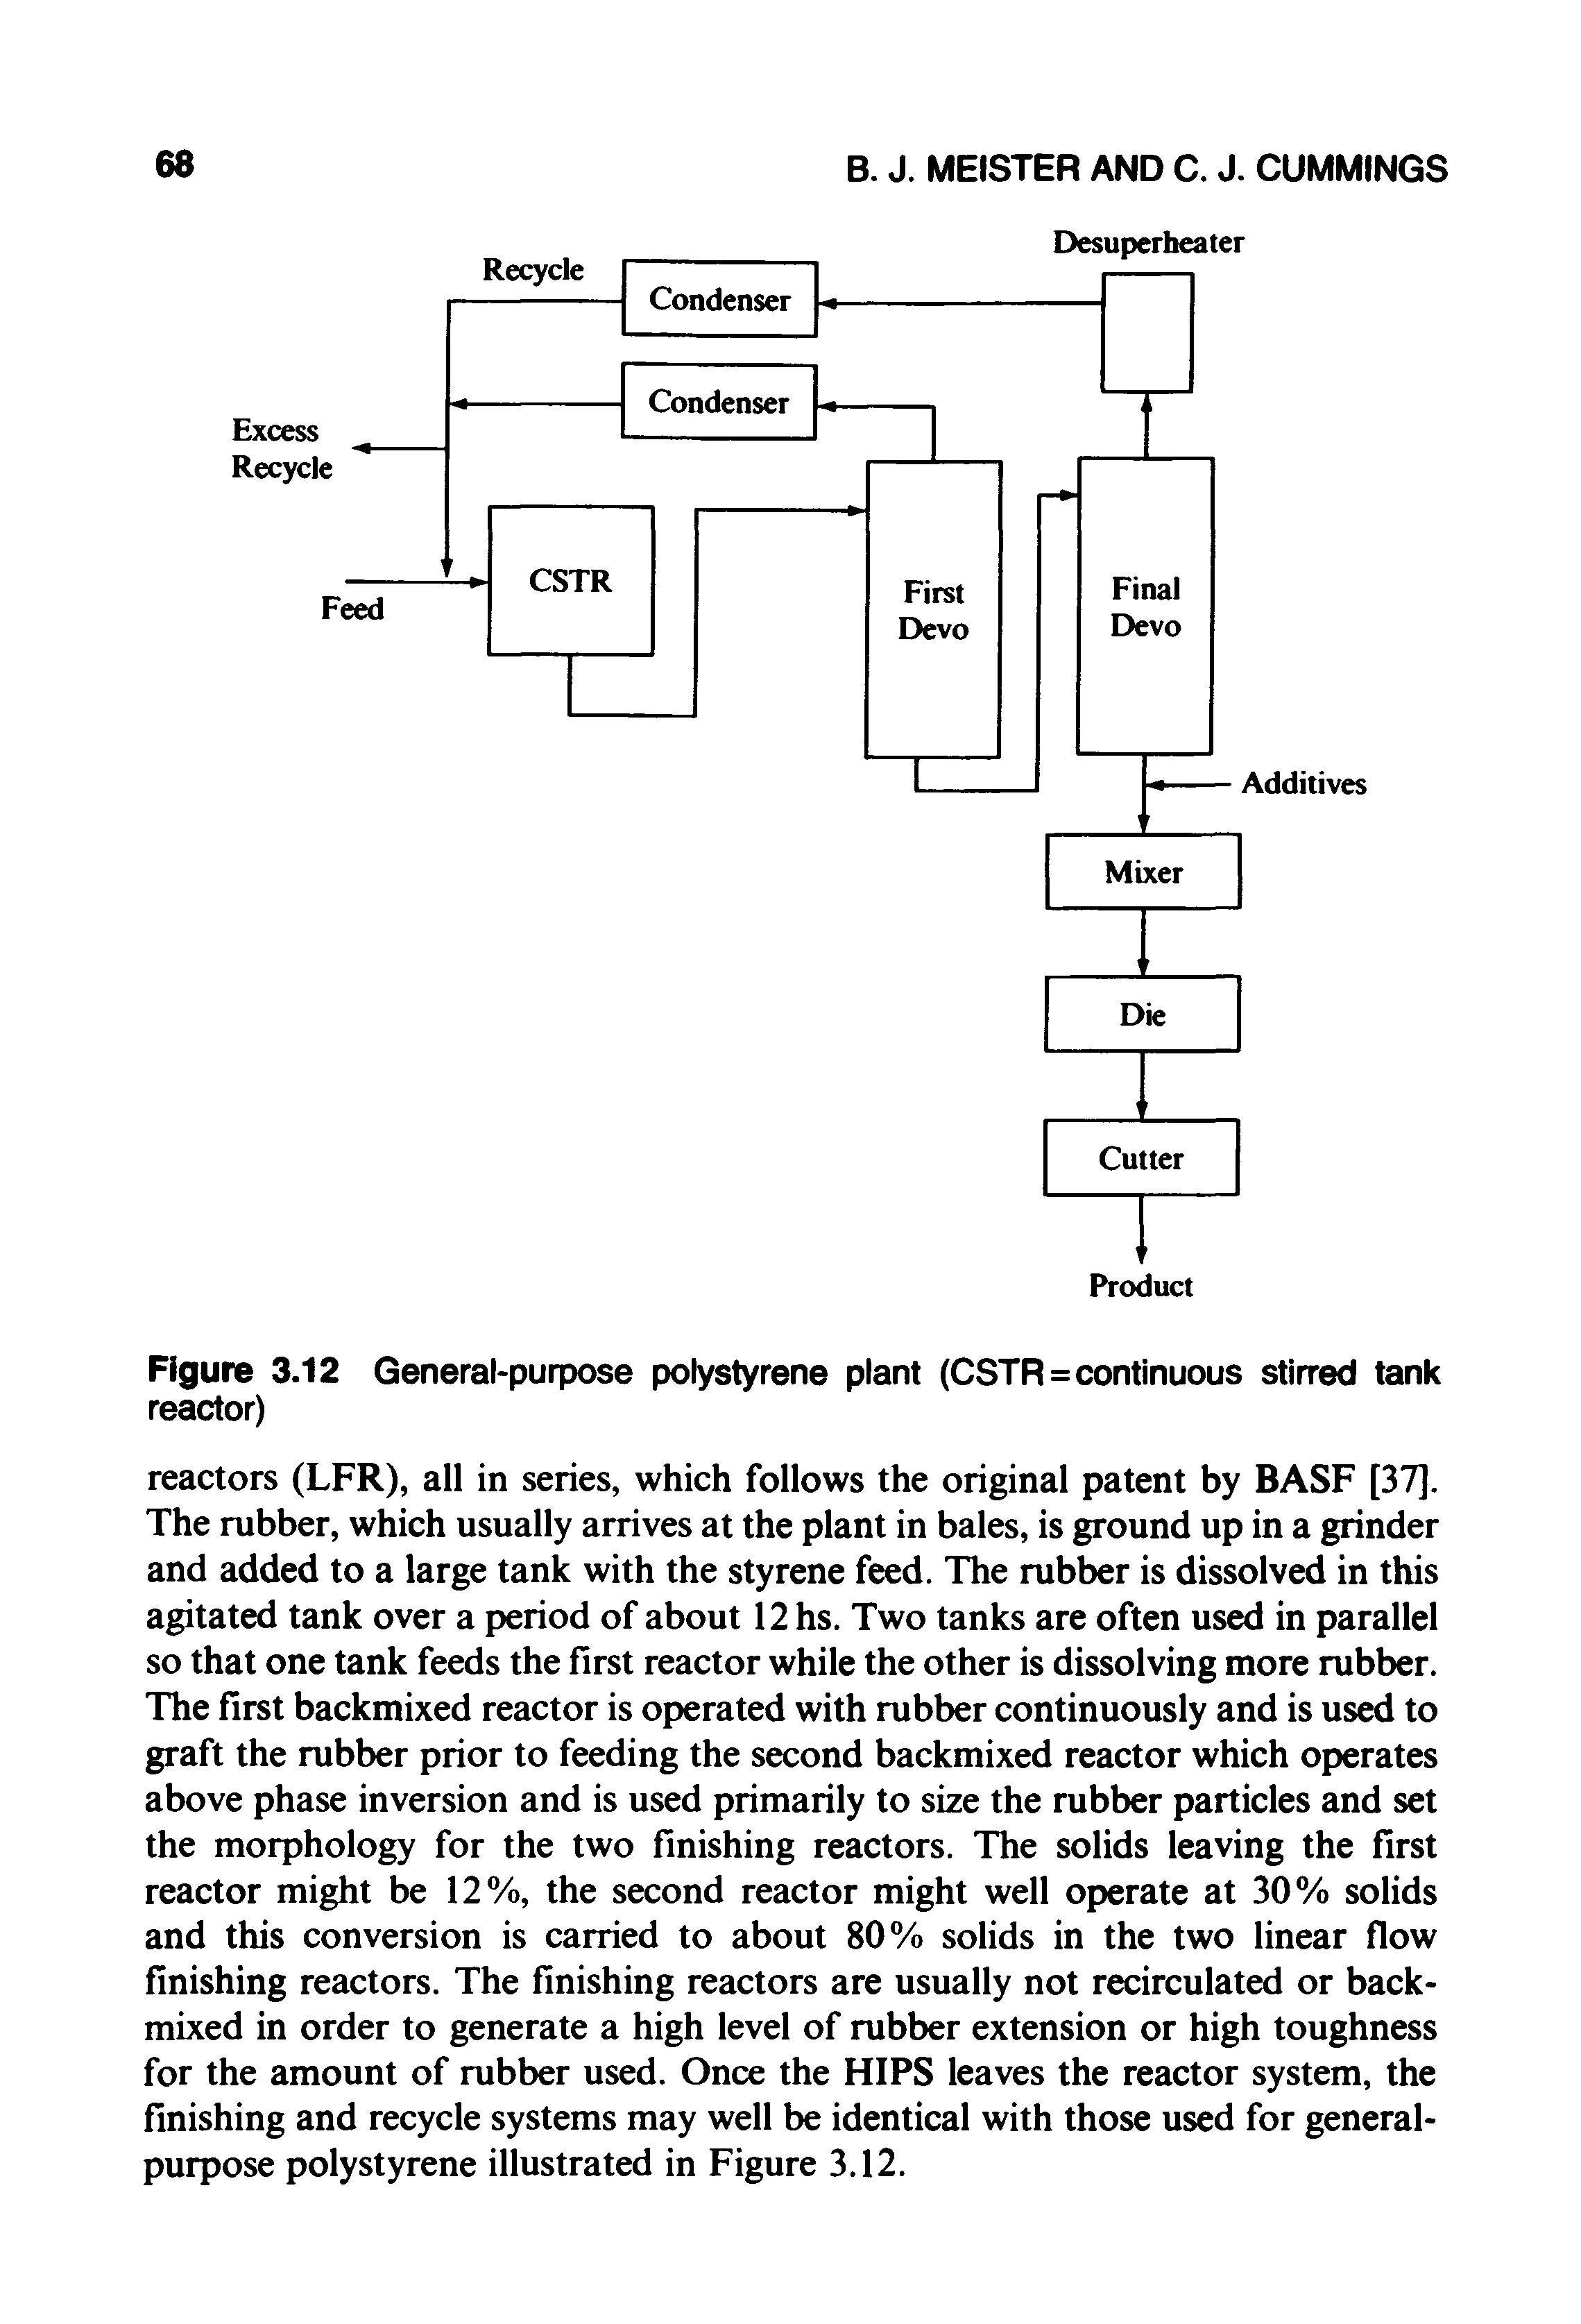 Figure 3.12 General-purpose polystyrene plant (CSTR=continuous stirred tank reactor)...